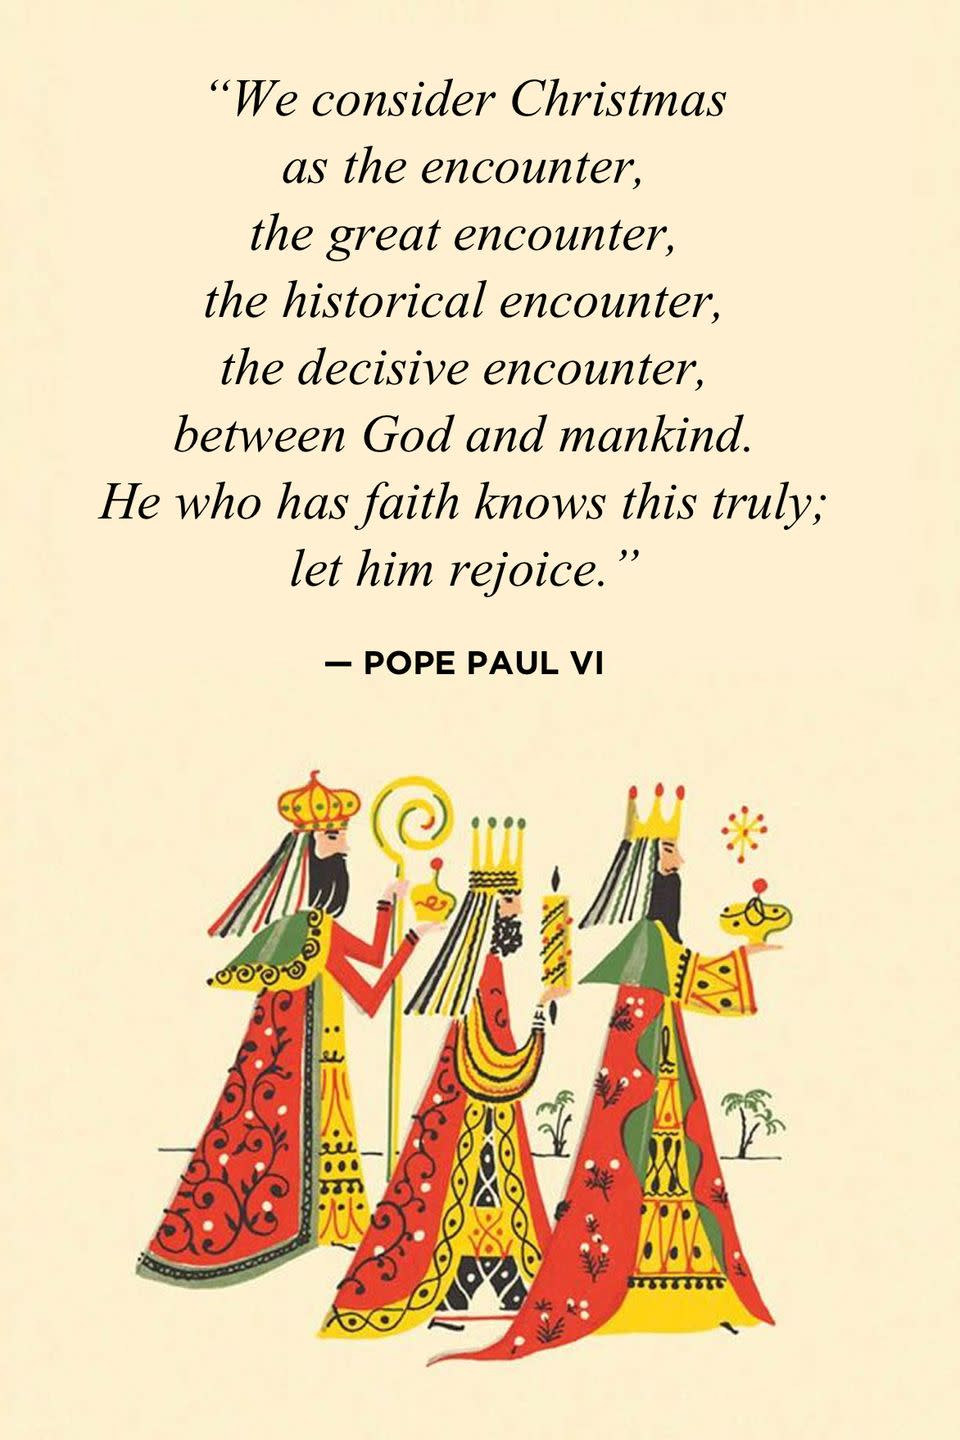 3) Pope Paul VI